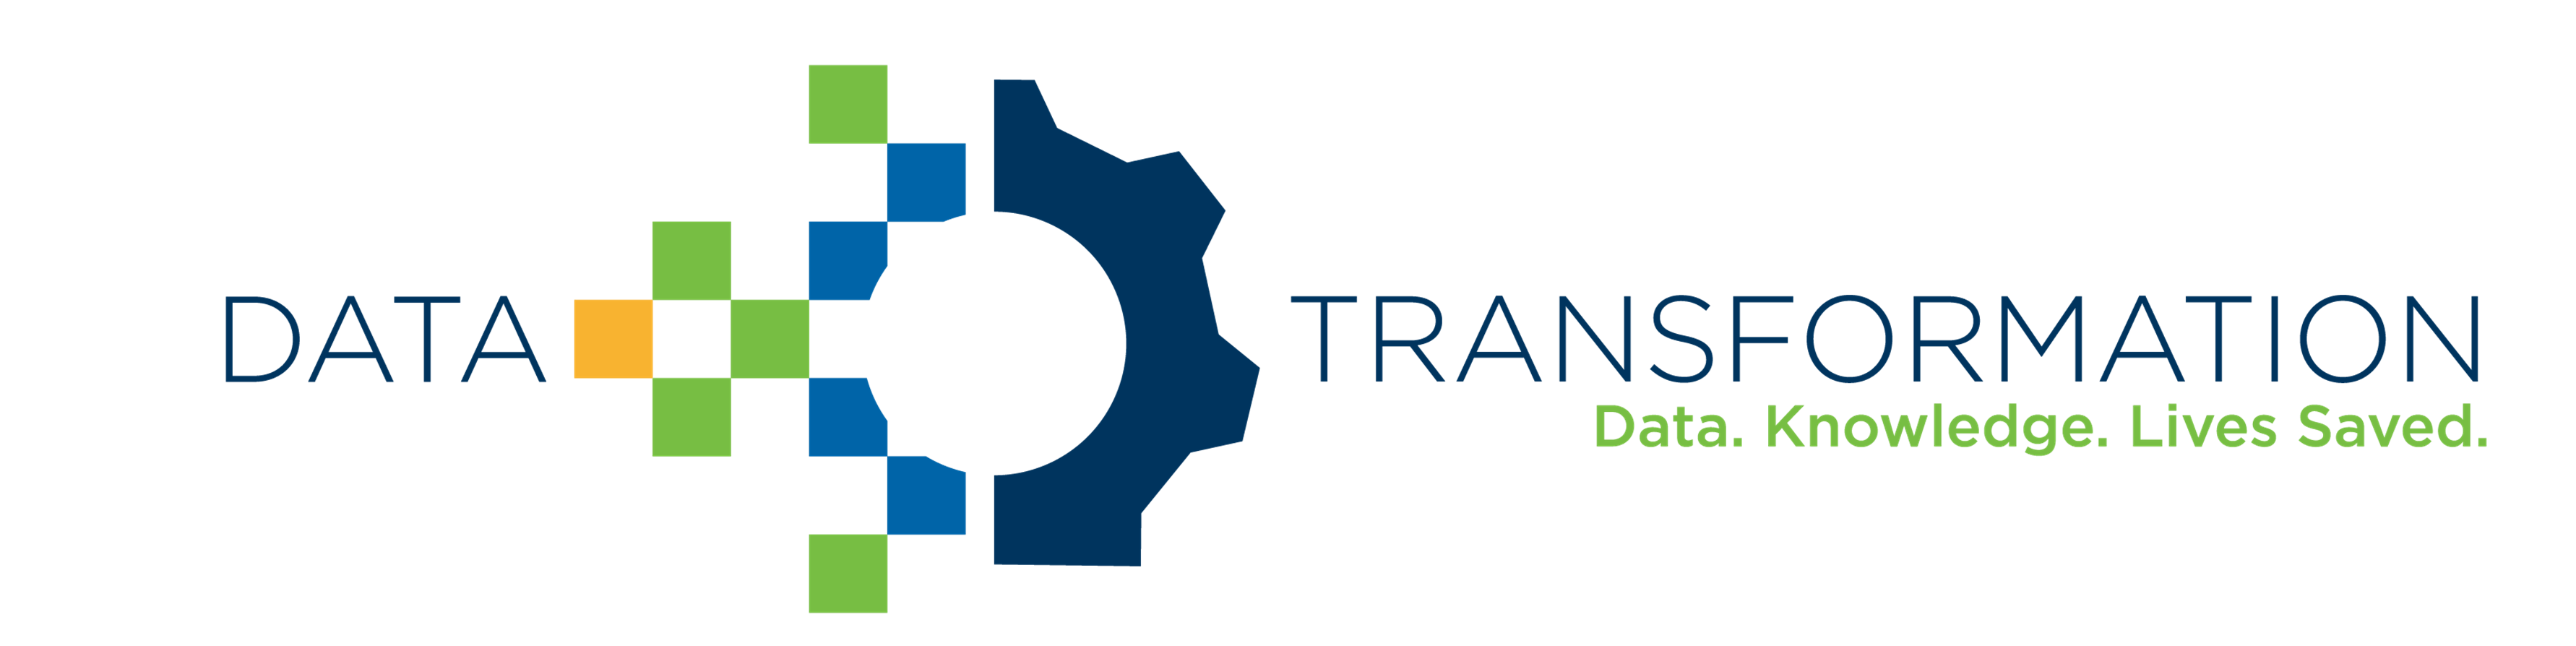 Data Transformation Logo